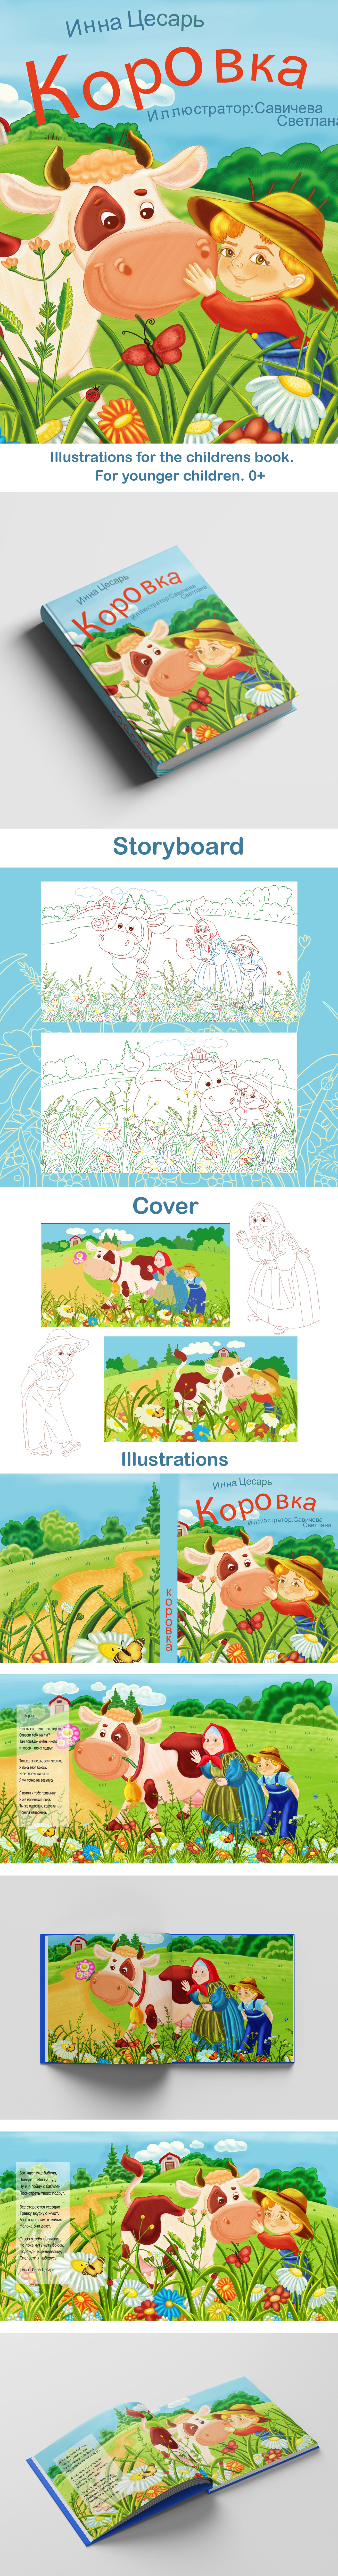 book illustrations digital illustration kids illustration children's book artwork